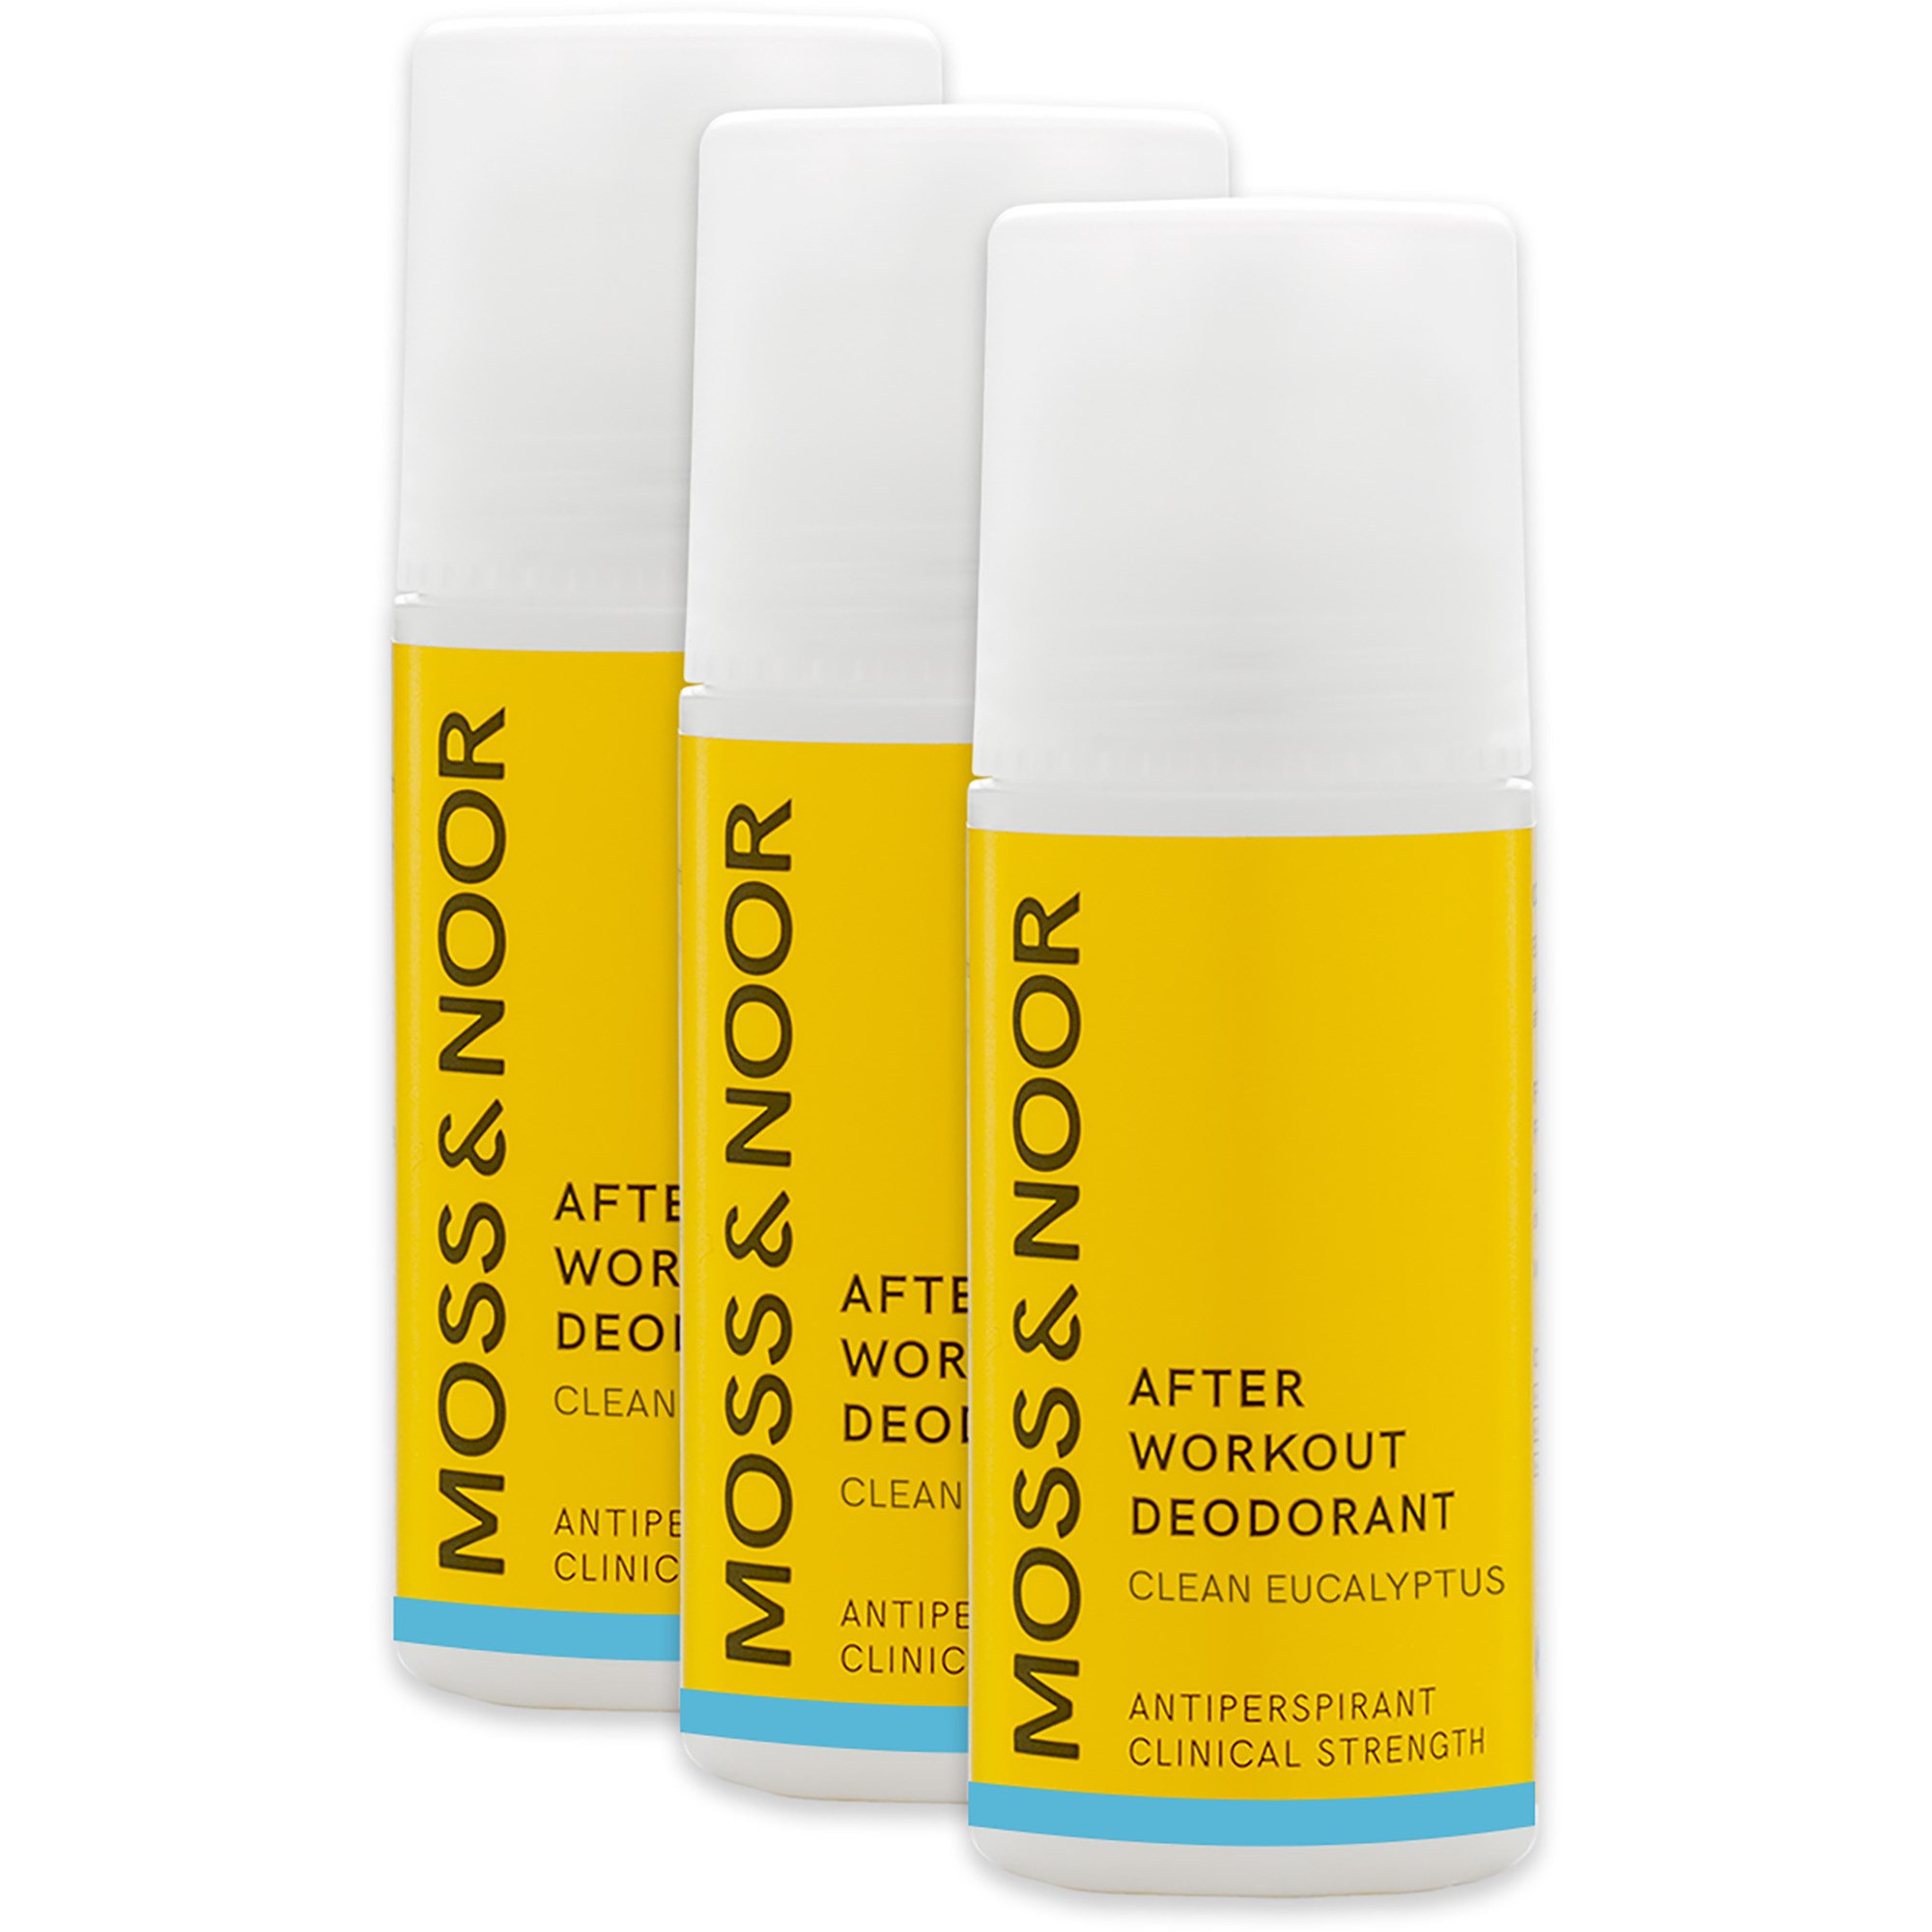 Moss & Noor After Workout Deodorant Clean Eucalyptus 3-pack